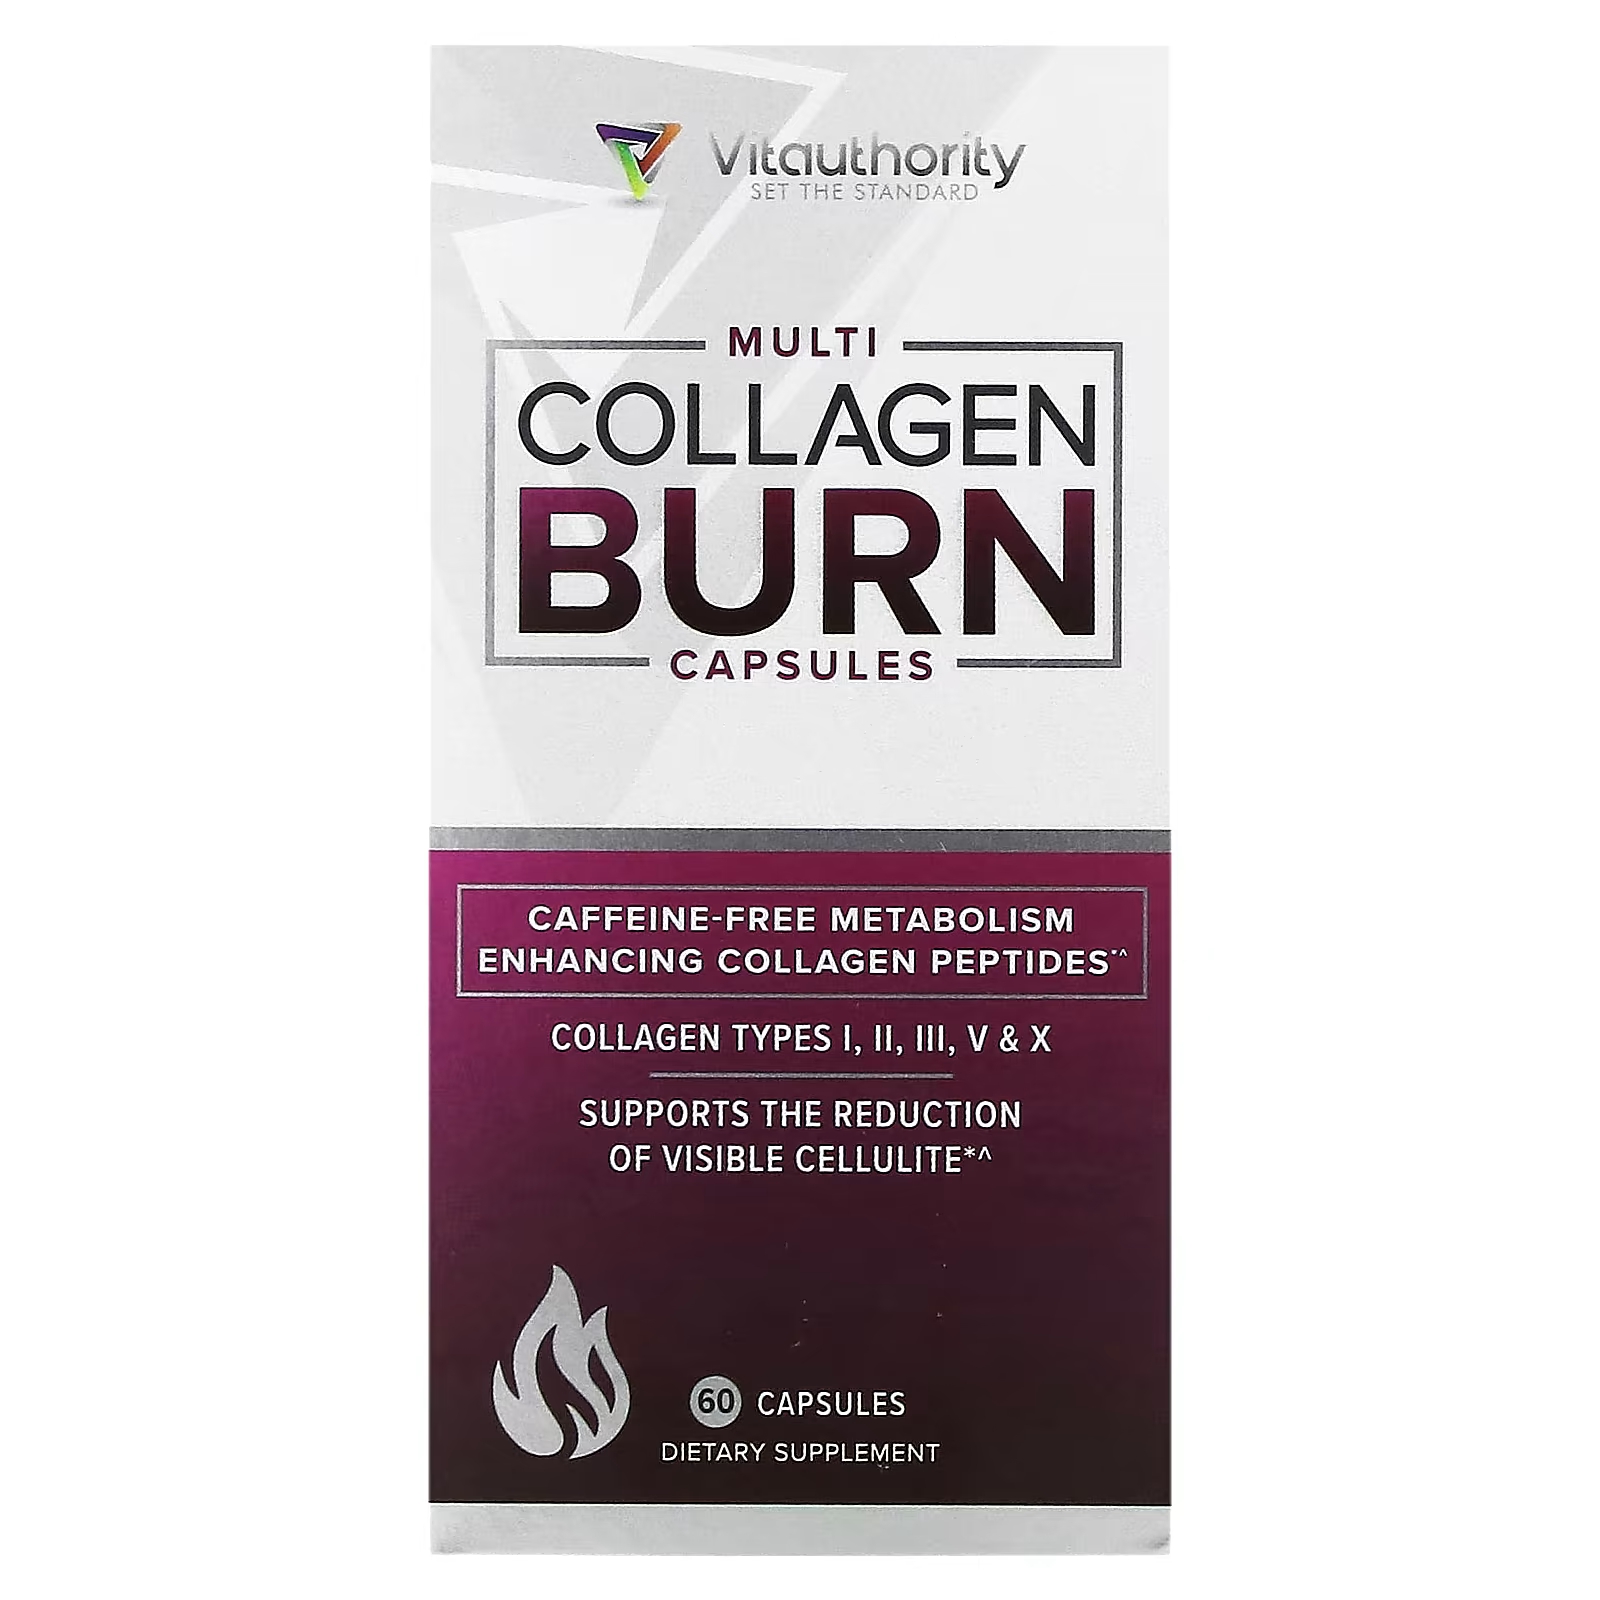 Пищевая добавка Vitauthority Мульти коллаген, 60 капсул vitauthority multi collagen burn 60 капсул